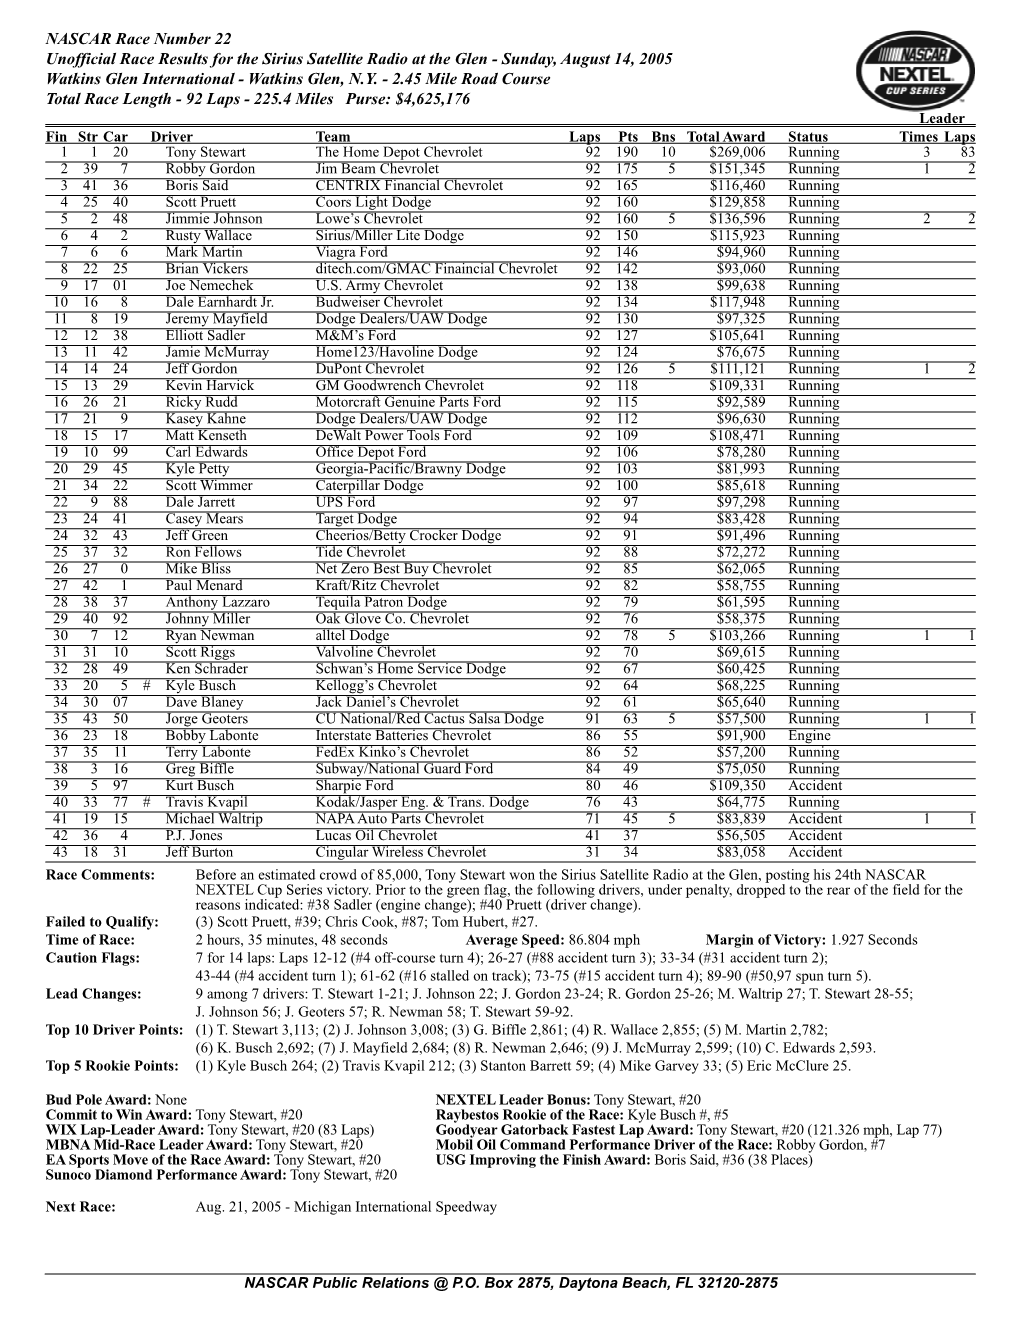 NASCAR Race Number 22 Unofficial Race Results for the Sirius Satellite Radio at the Glen - Sunday, August 14, 2005 Watkins Glen International - Watkins Glen, N.Y